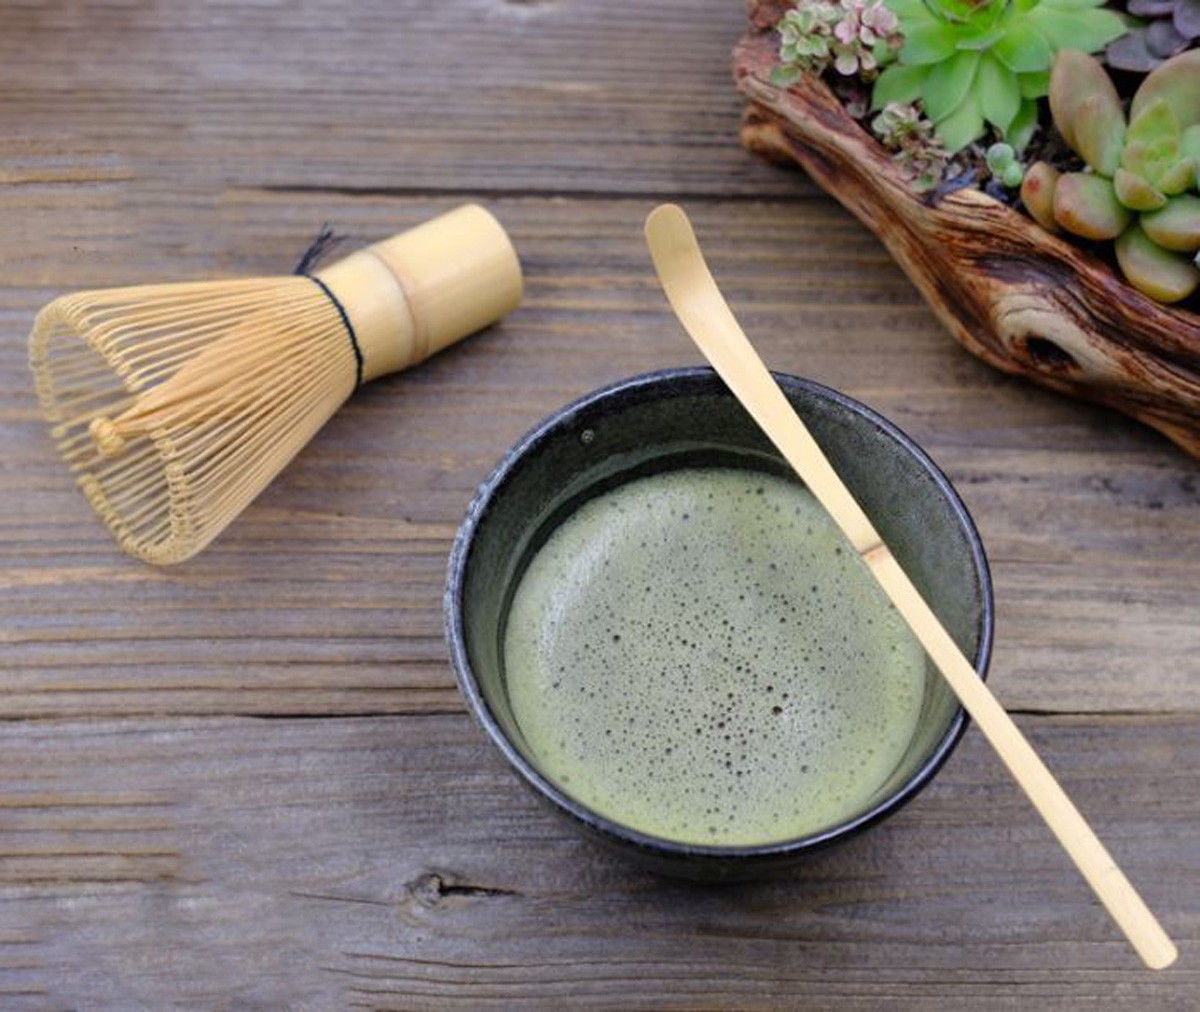 RUIRUIY Matcha Whisk,Japanese-Style Bamboo Matcha Tea Whisk,Matcha Stirrer  with Bowl Brush Matcha Brush,Tea Accessories(Yellow)